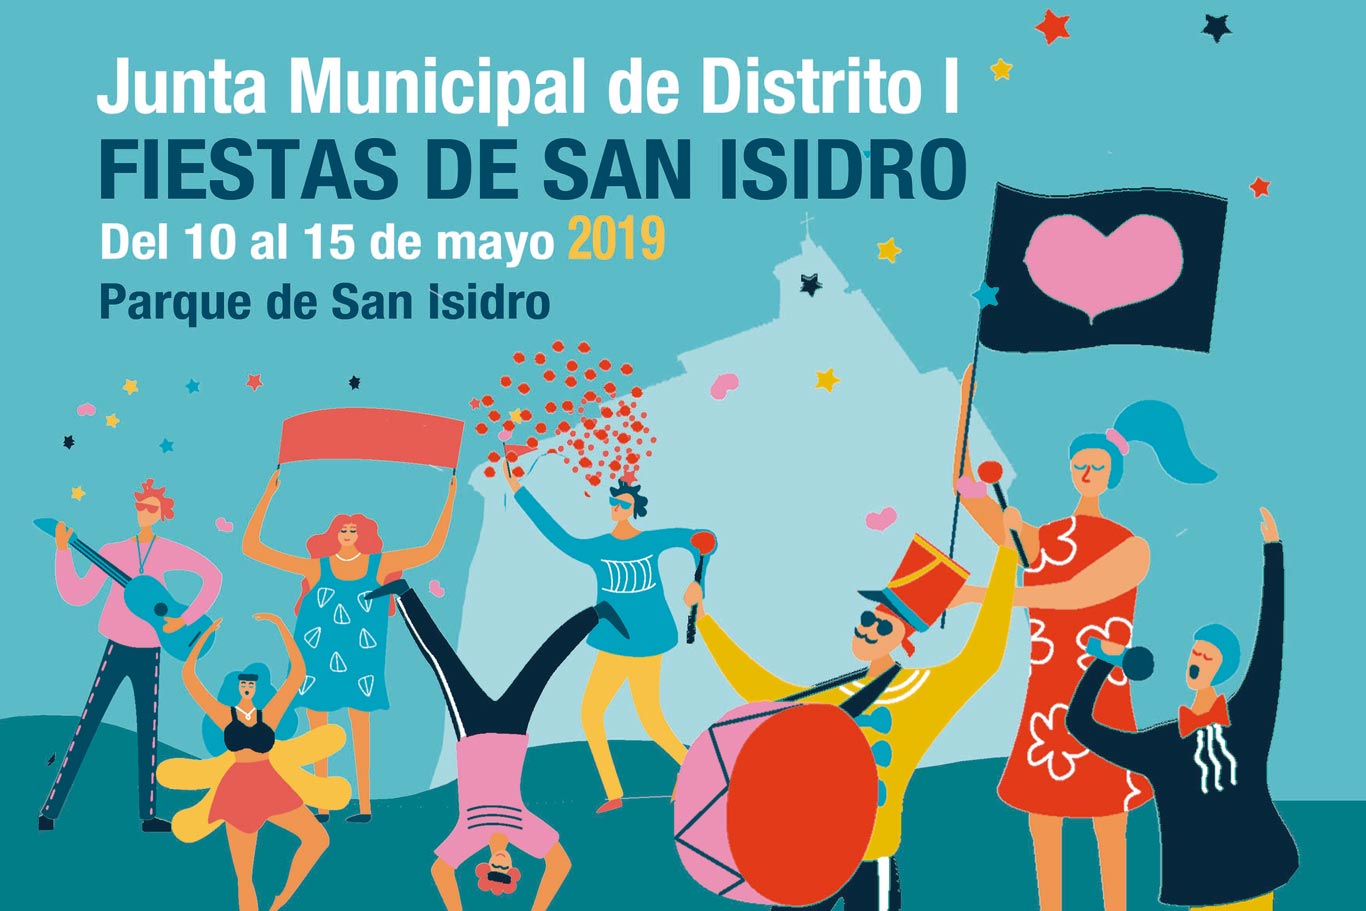 Fiestas de San Isidro 2019 - Dream Alcalá